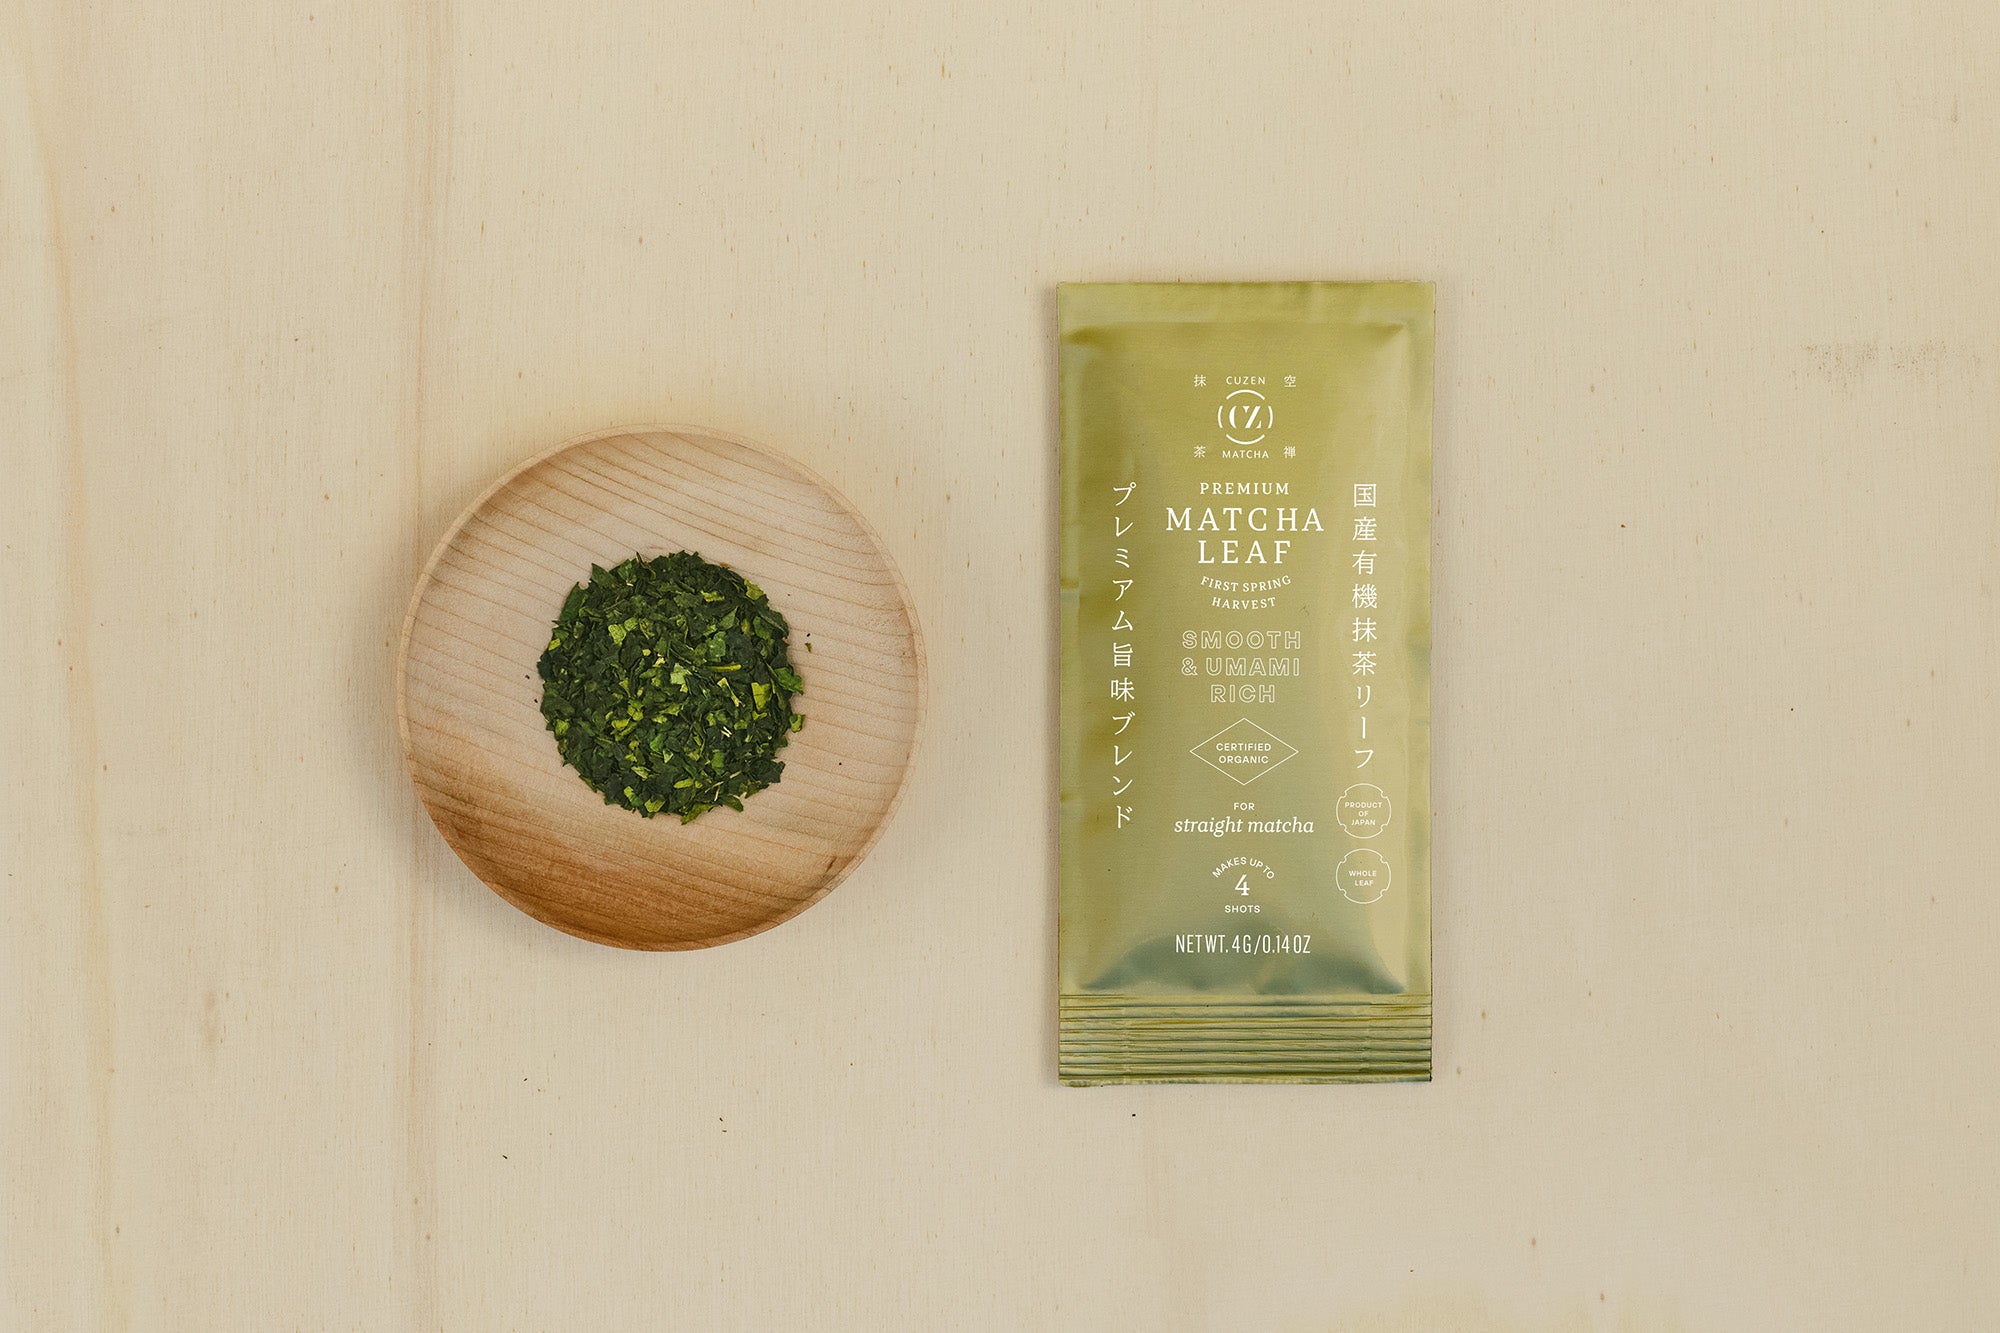 A 4-gram sample packet of Premium Blend Matcha next to a saucerful of deep green matcha leaves.